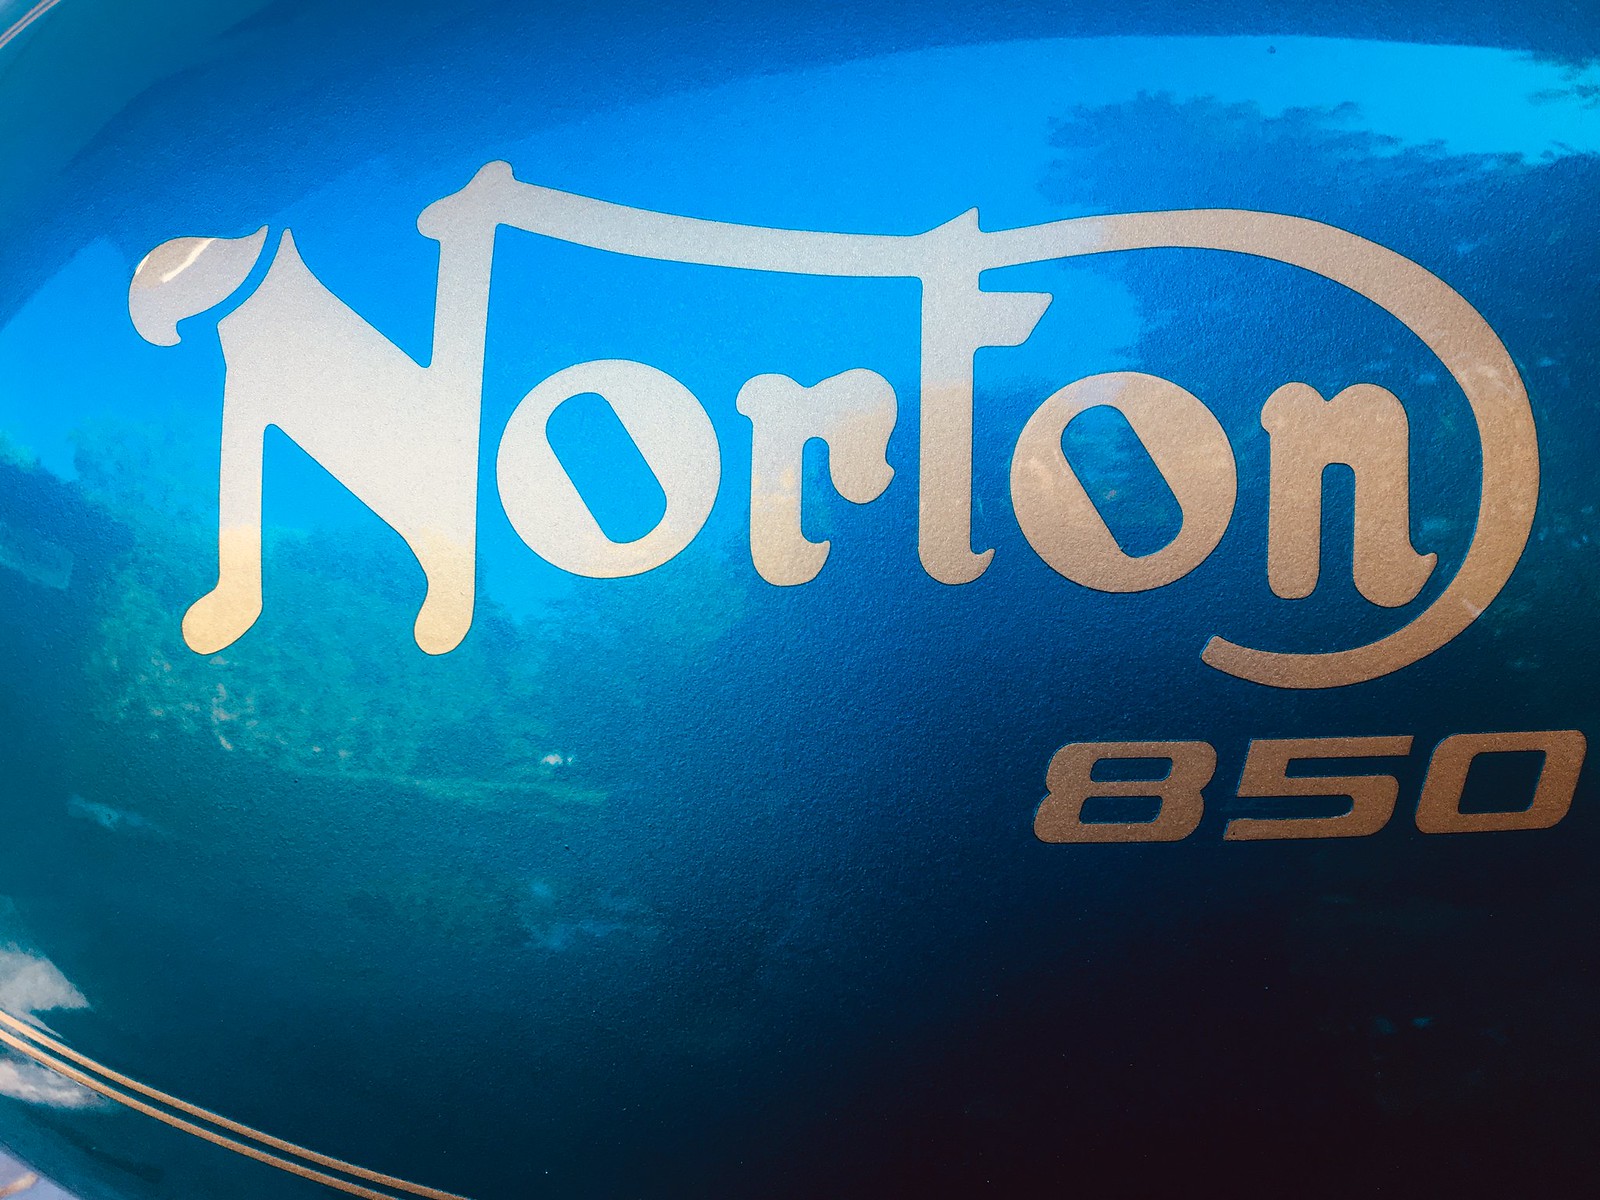 Norton Tank / Paint Quality